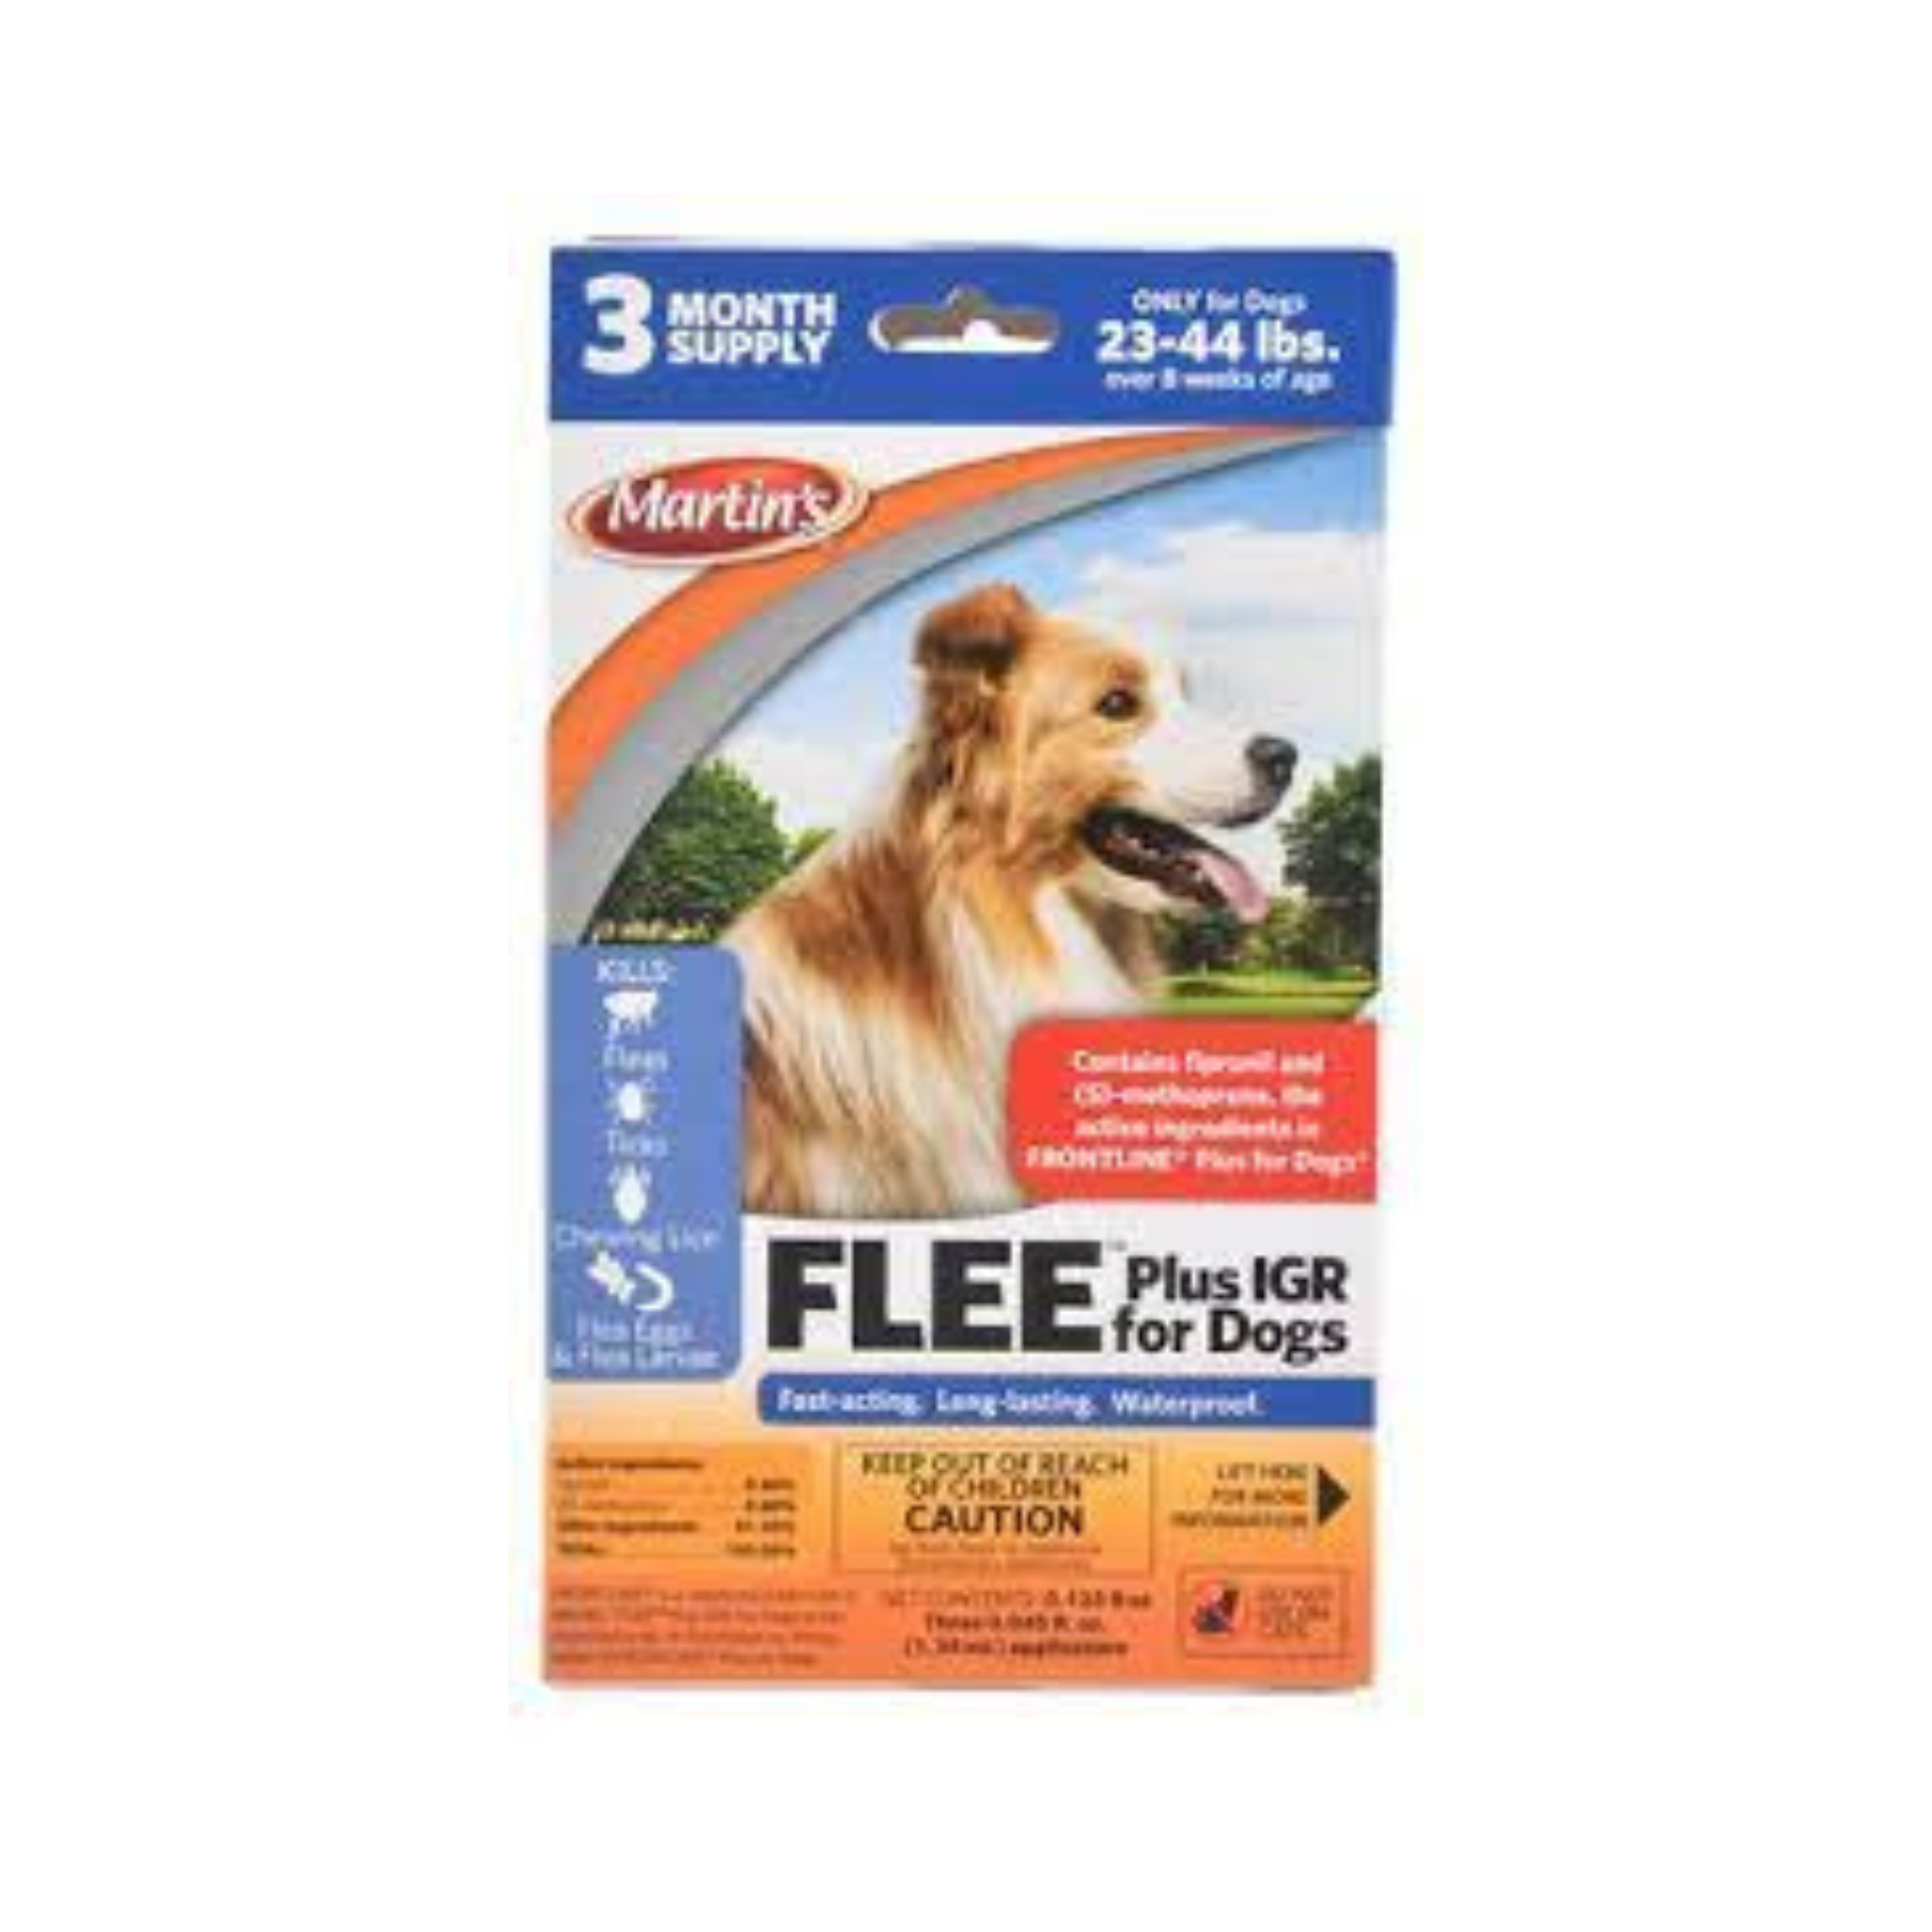 Martin's FLEE Plus IGR for Dogs 23-44lbs.